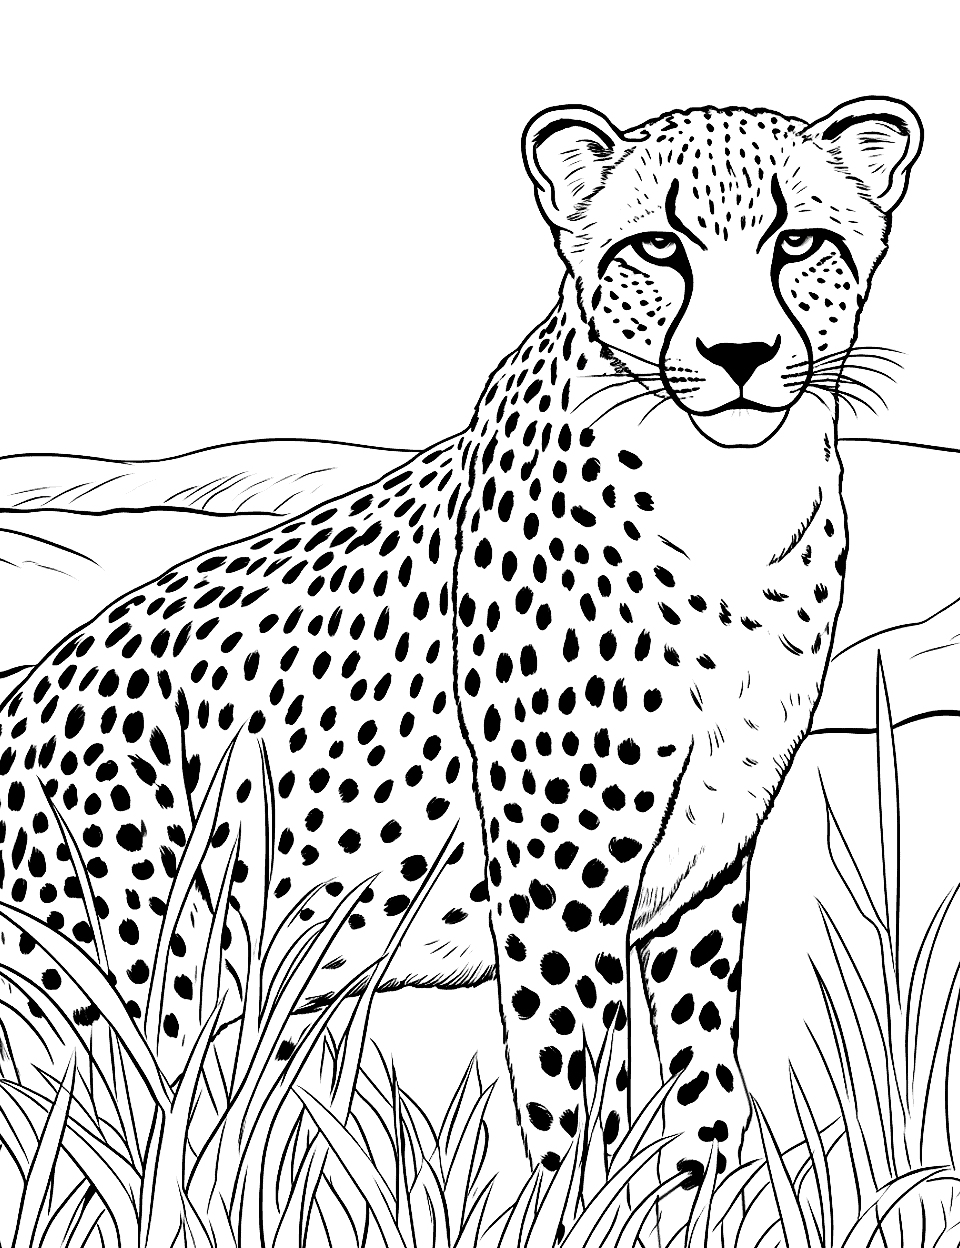 Cheetah in a Field of Tall Grass Coloring Page - A cheetah in tall savannah grass.